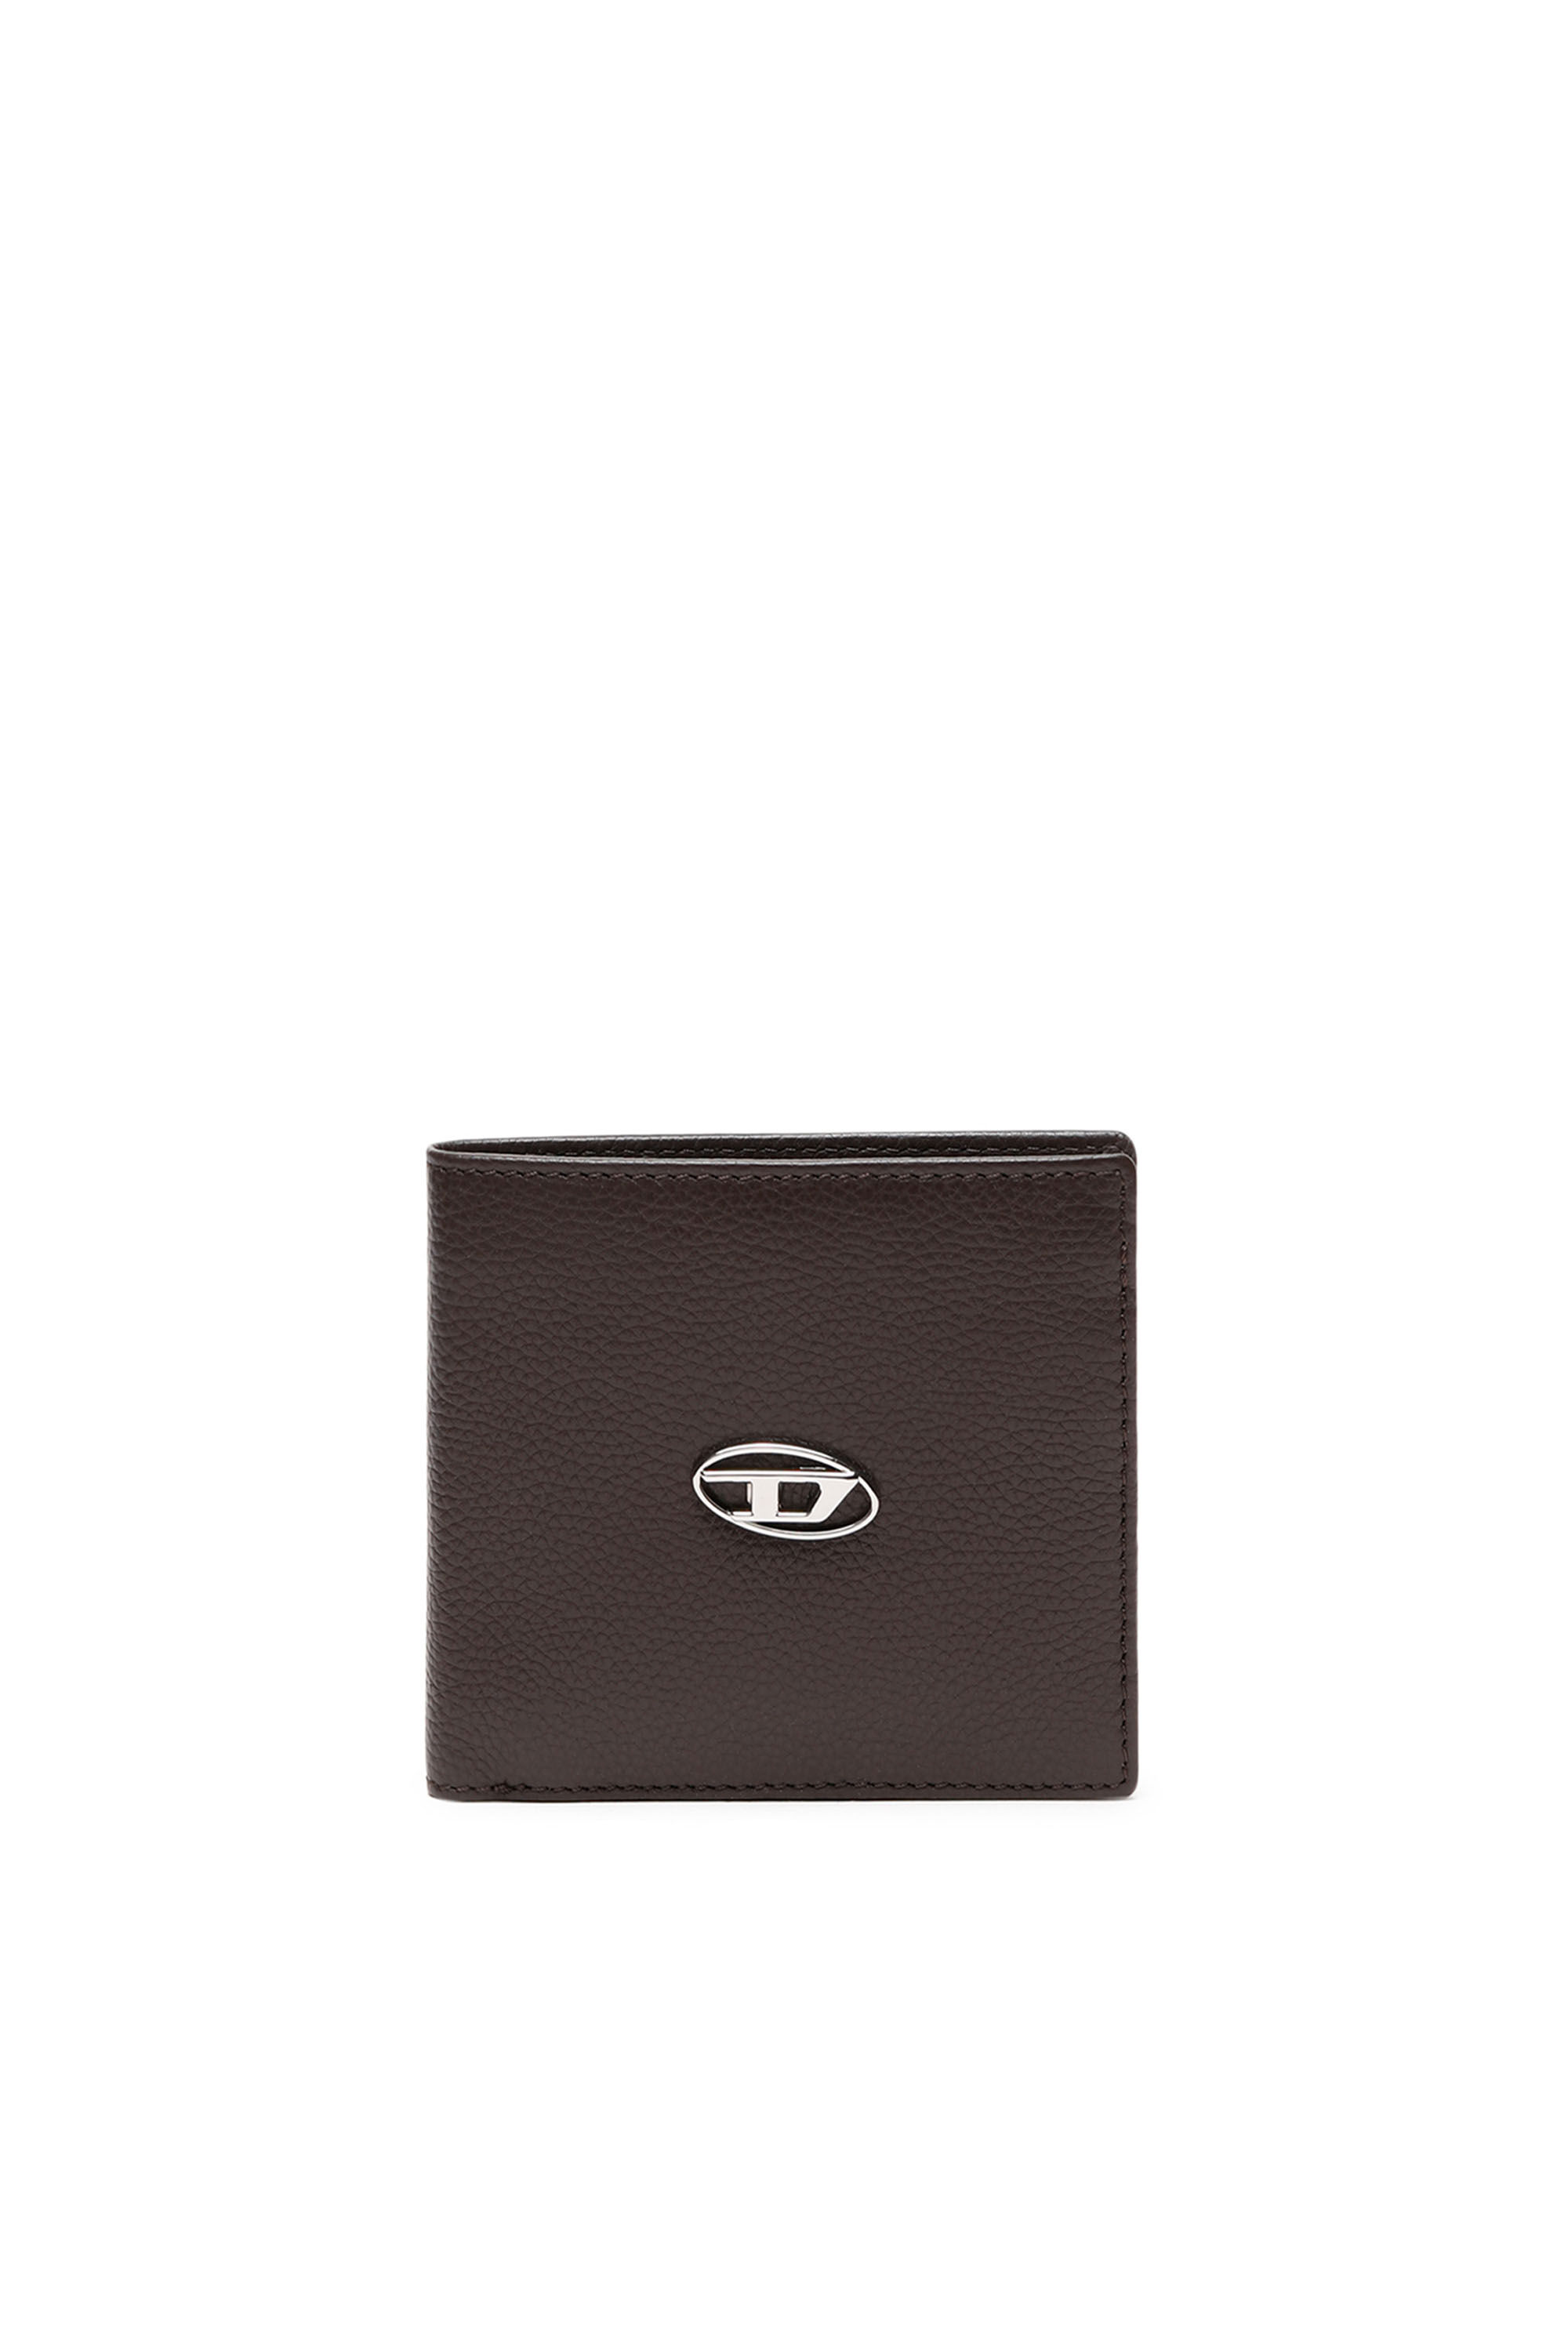 Diesel - BI FOLD COIN S, Man Bi-fold wallet in grainy leather in Brown - Image 1